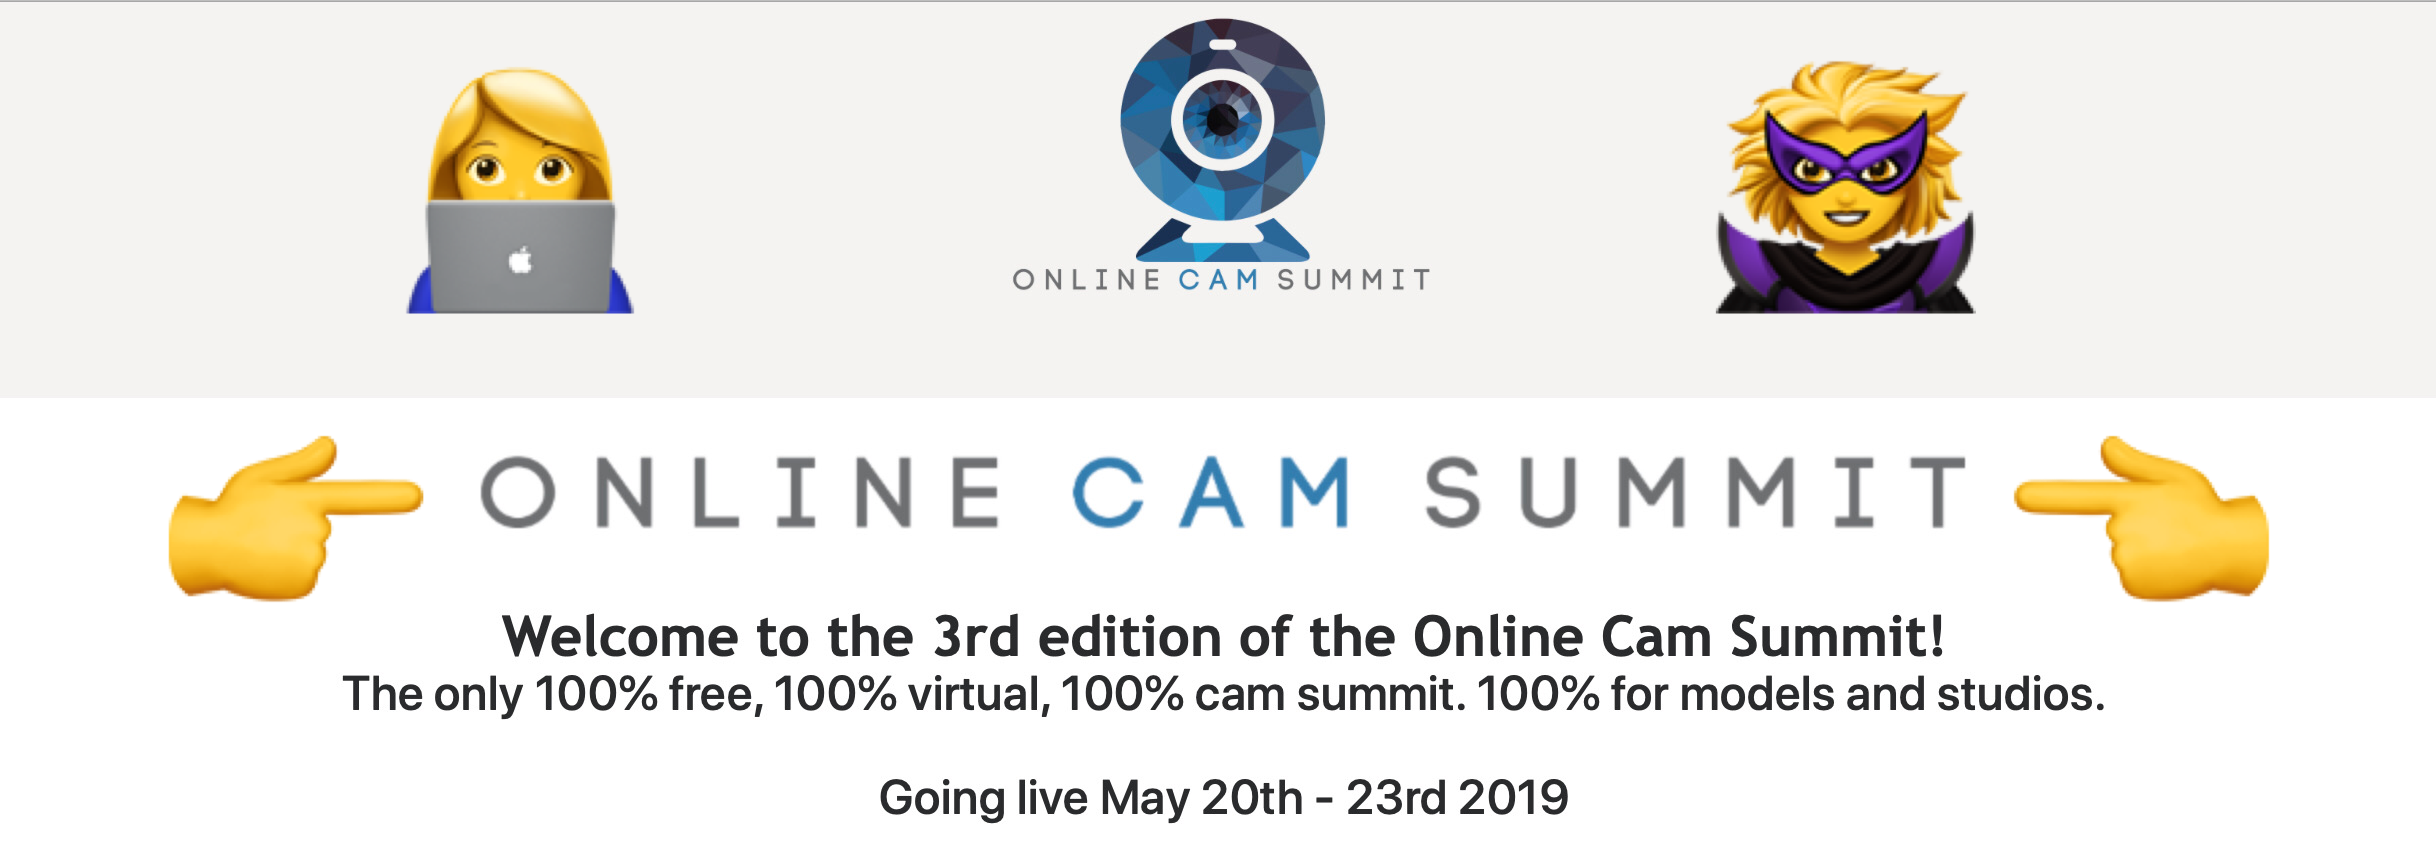 https://www.ynotcam.com/wp-content/uploads/2019/05/Online-cam-summit.png